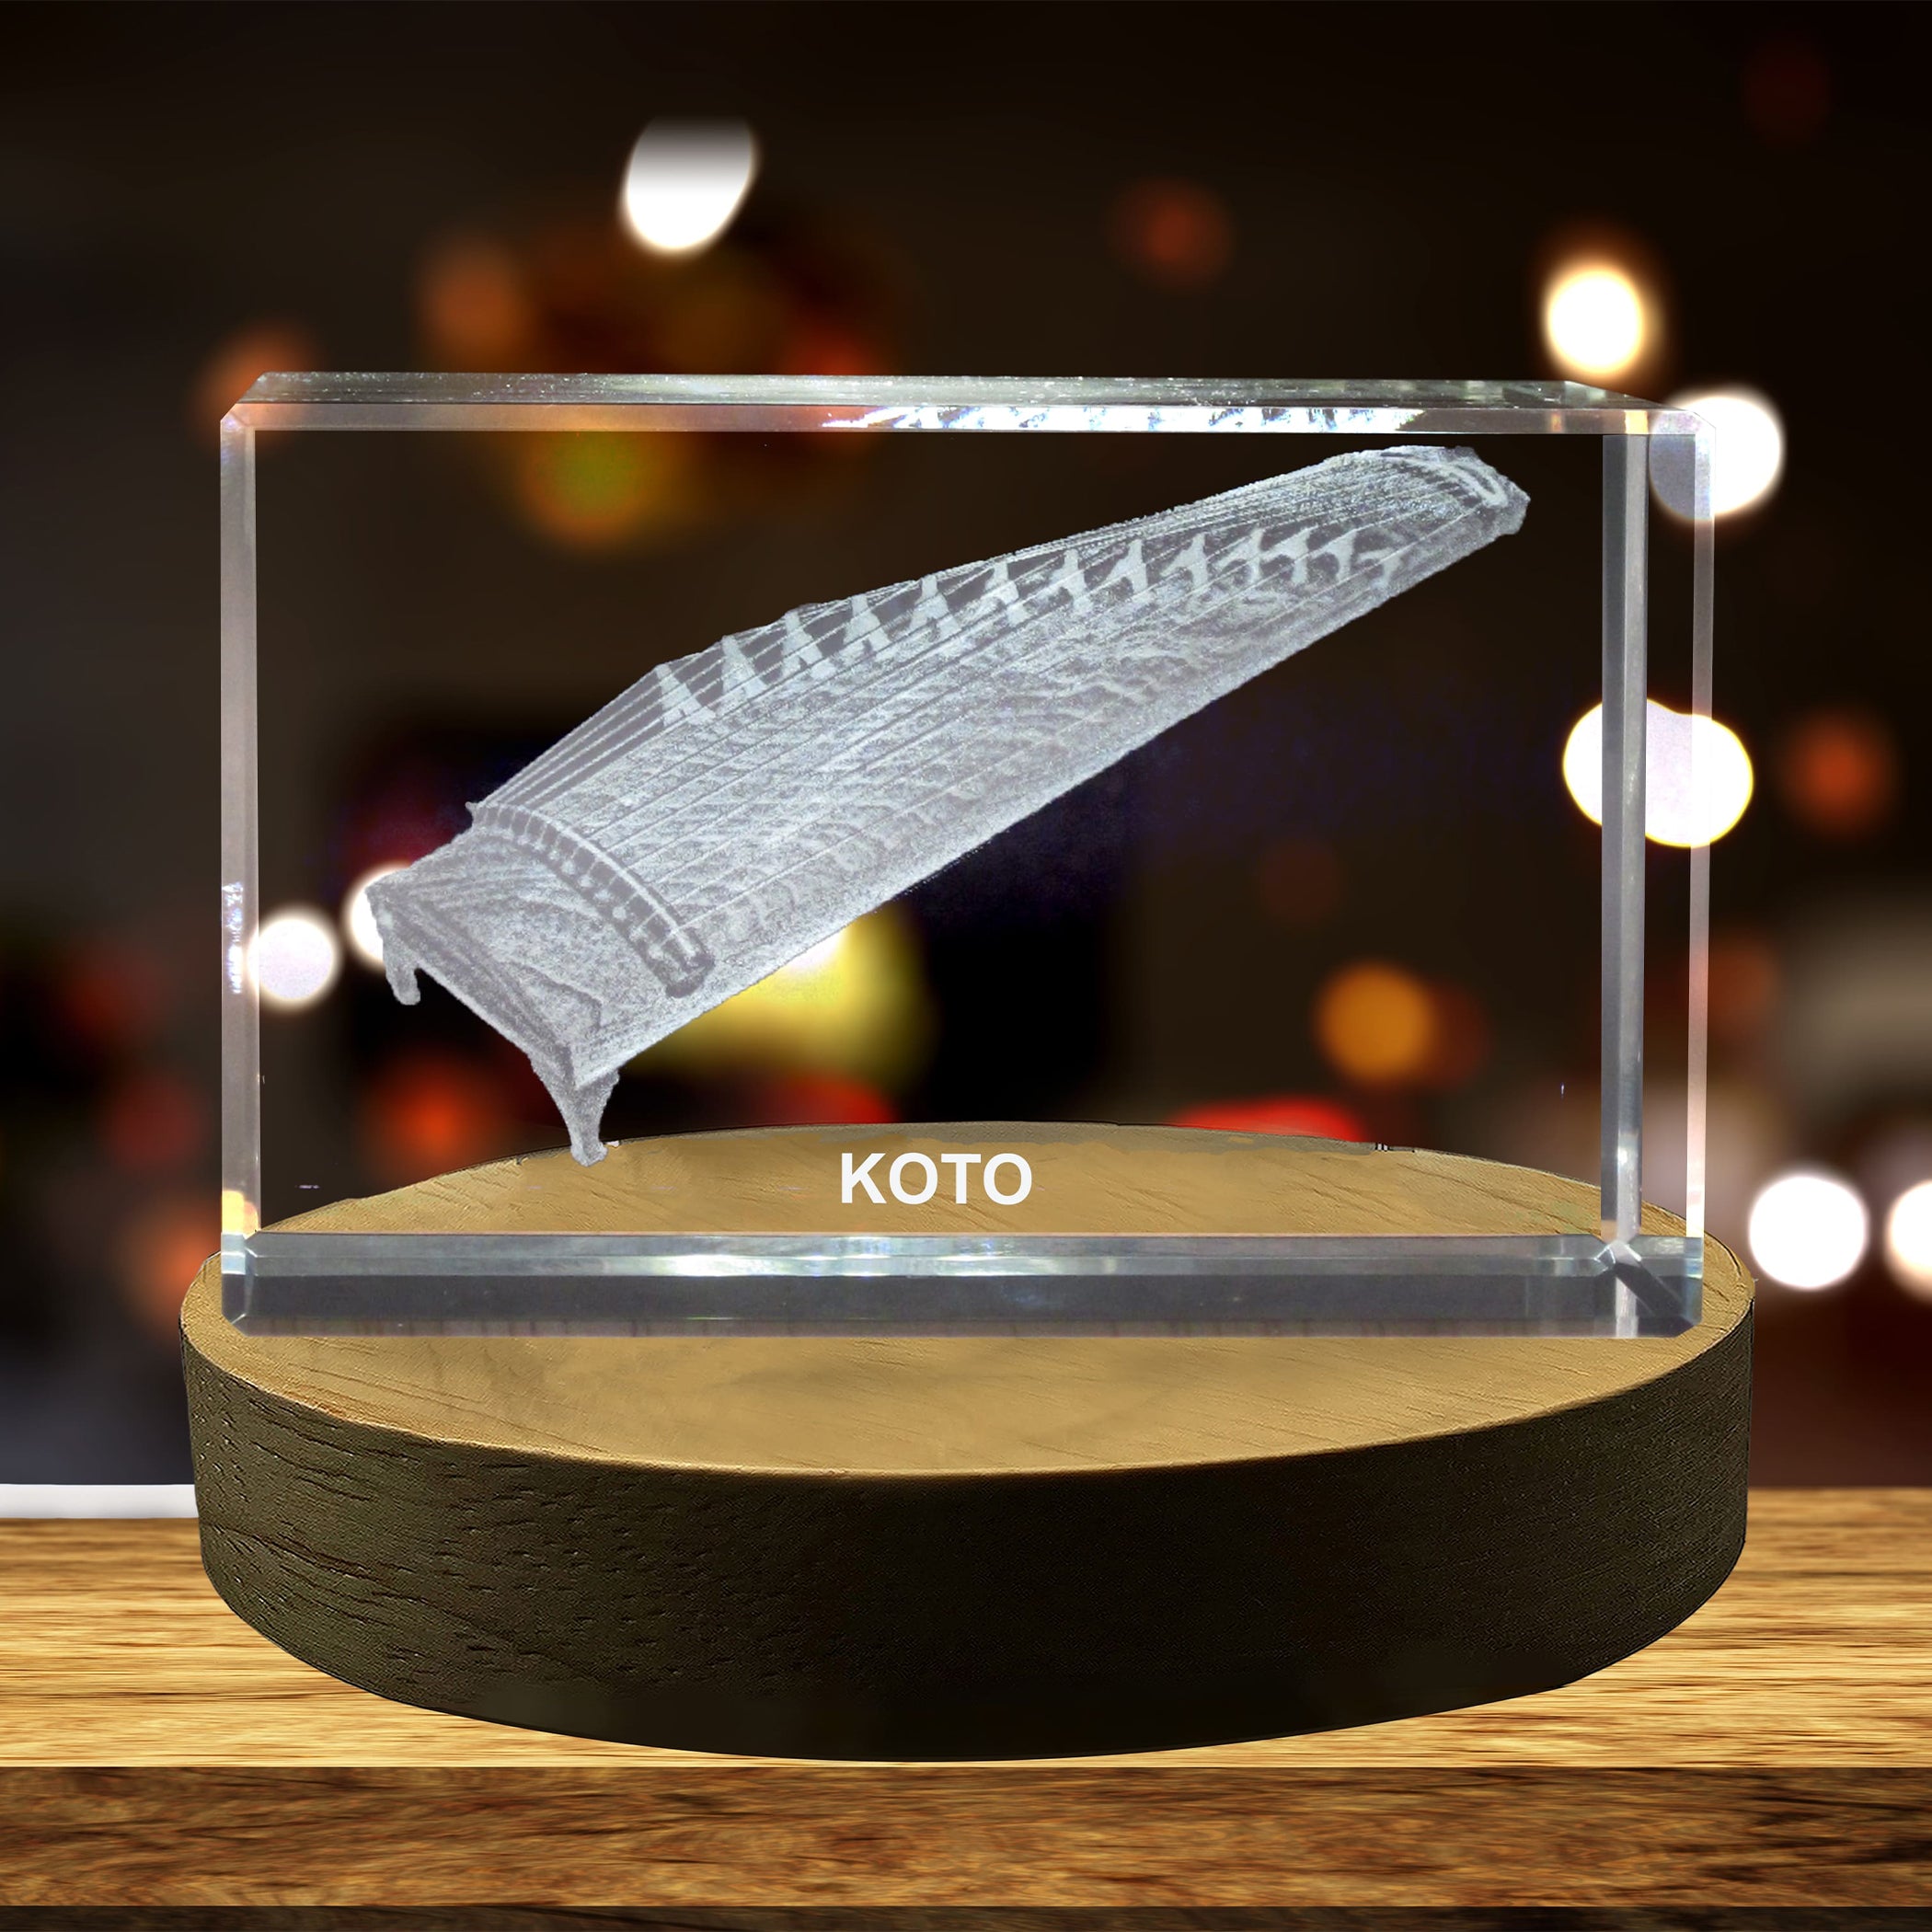 Koto 3D Engraved Crystal | Music 3D Engraved Crystal Keepsake A&B Crystal Collection